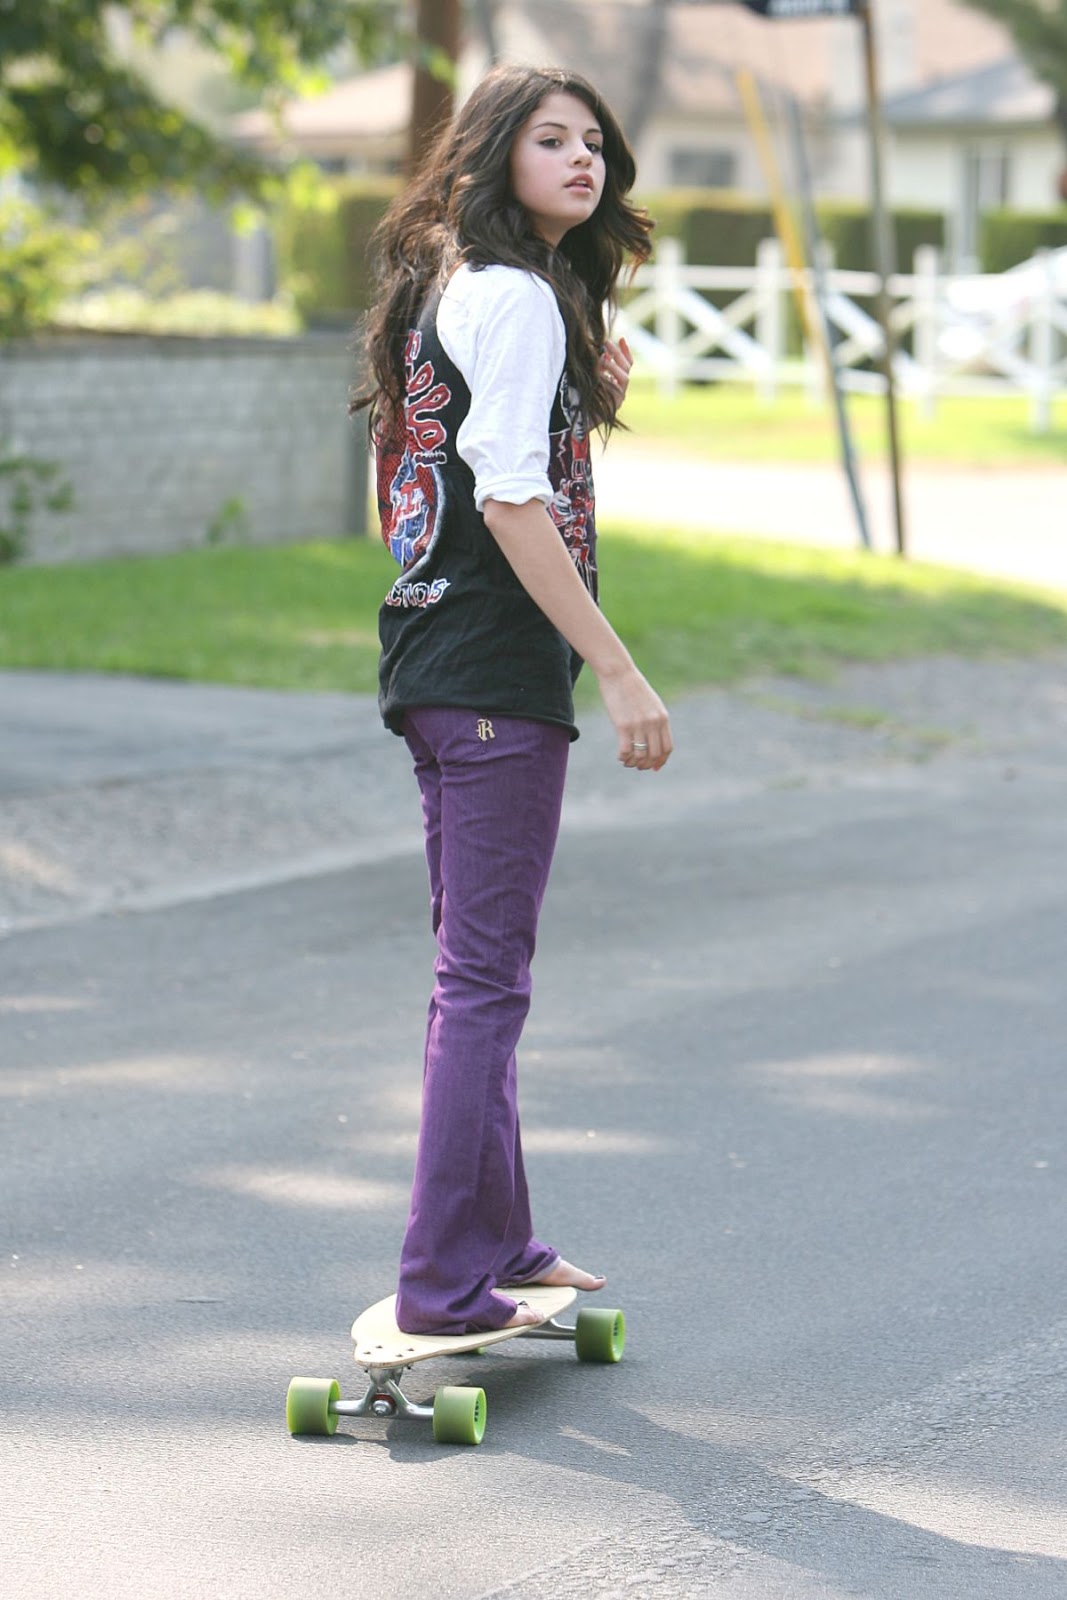 Barefoot Celebrities: Selena Gomez barefoot skating